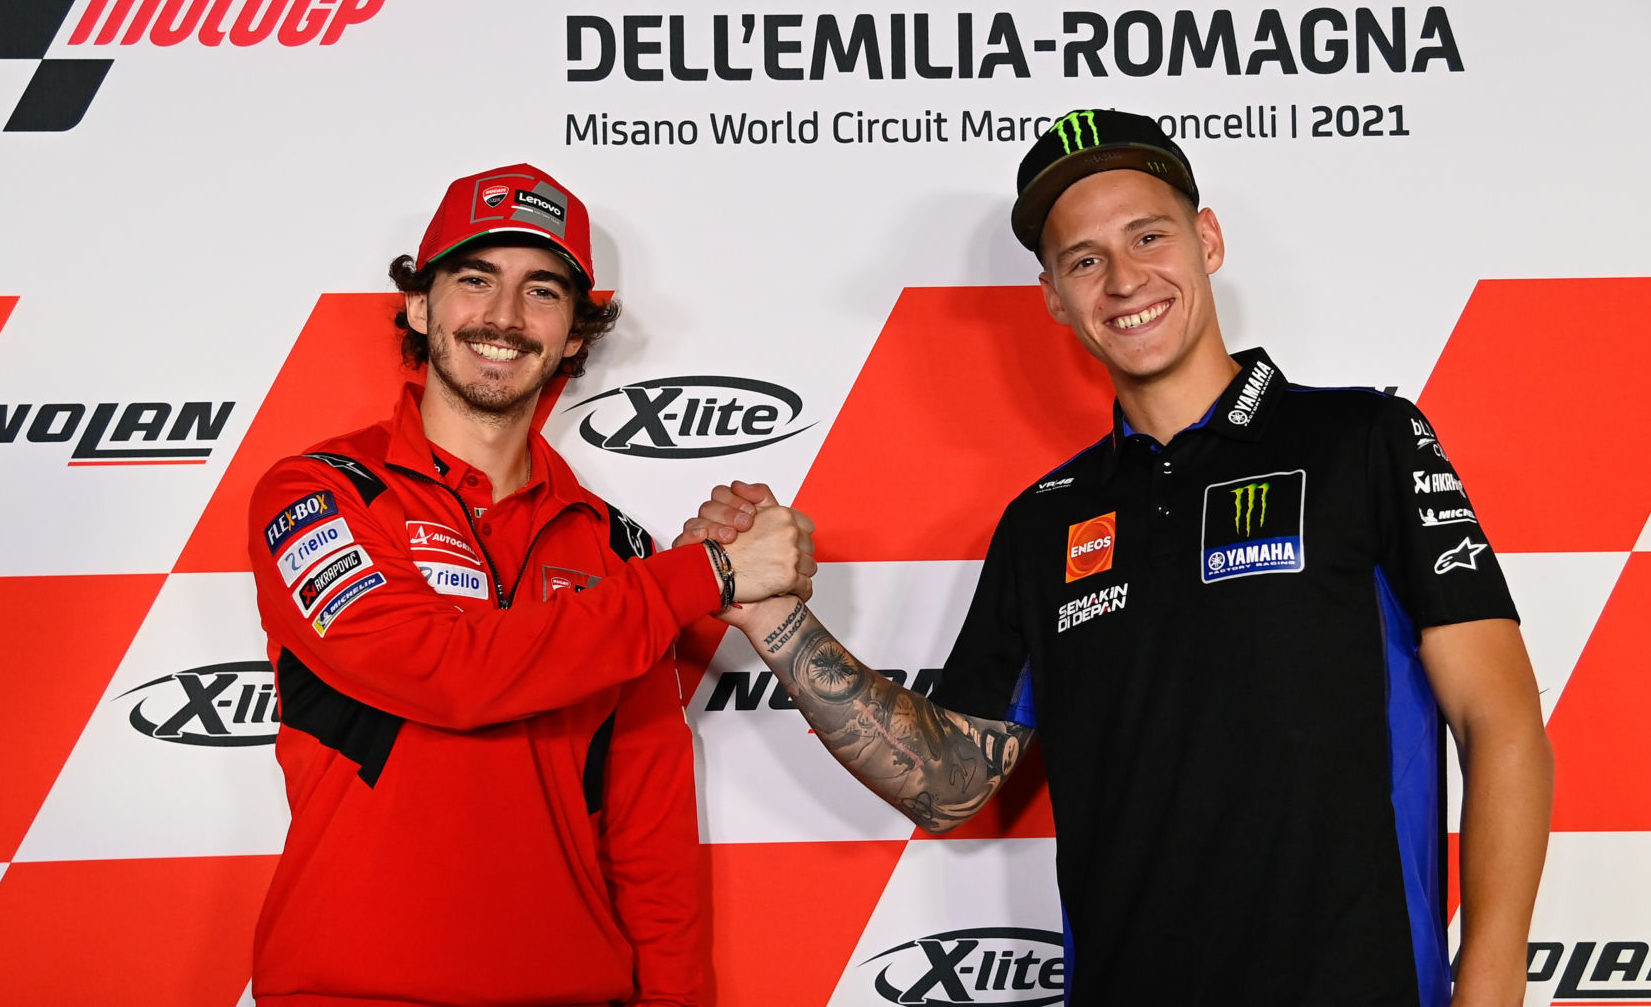 2021 MotoGP World Championship hopefuls Francesco Bagnaia (left) and Fabio Quartararo (right). Photo courtesy Dorna.